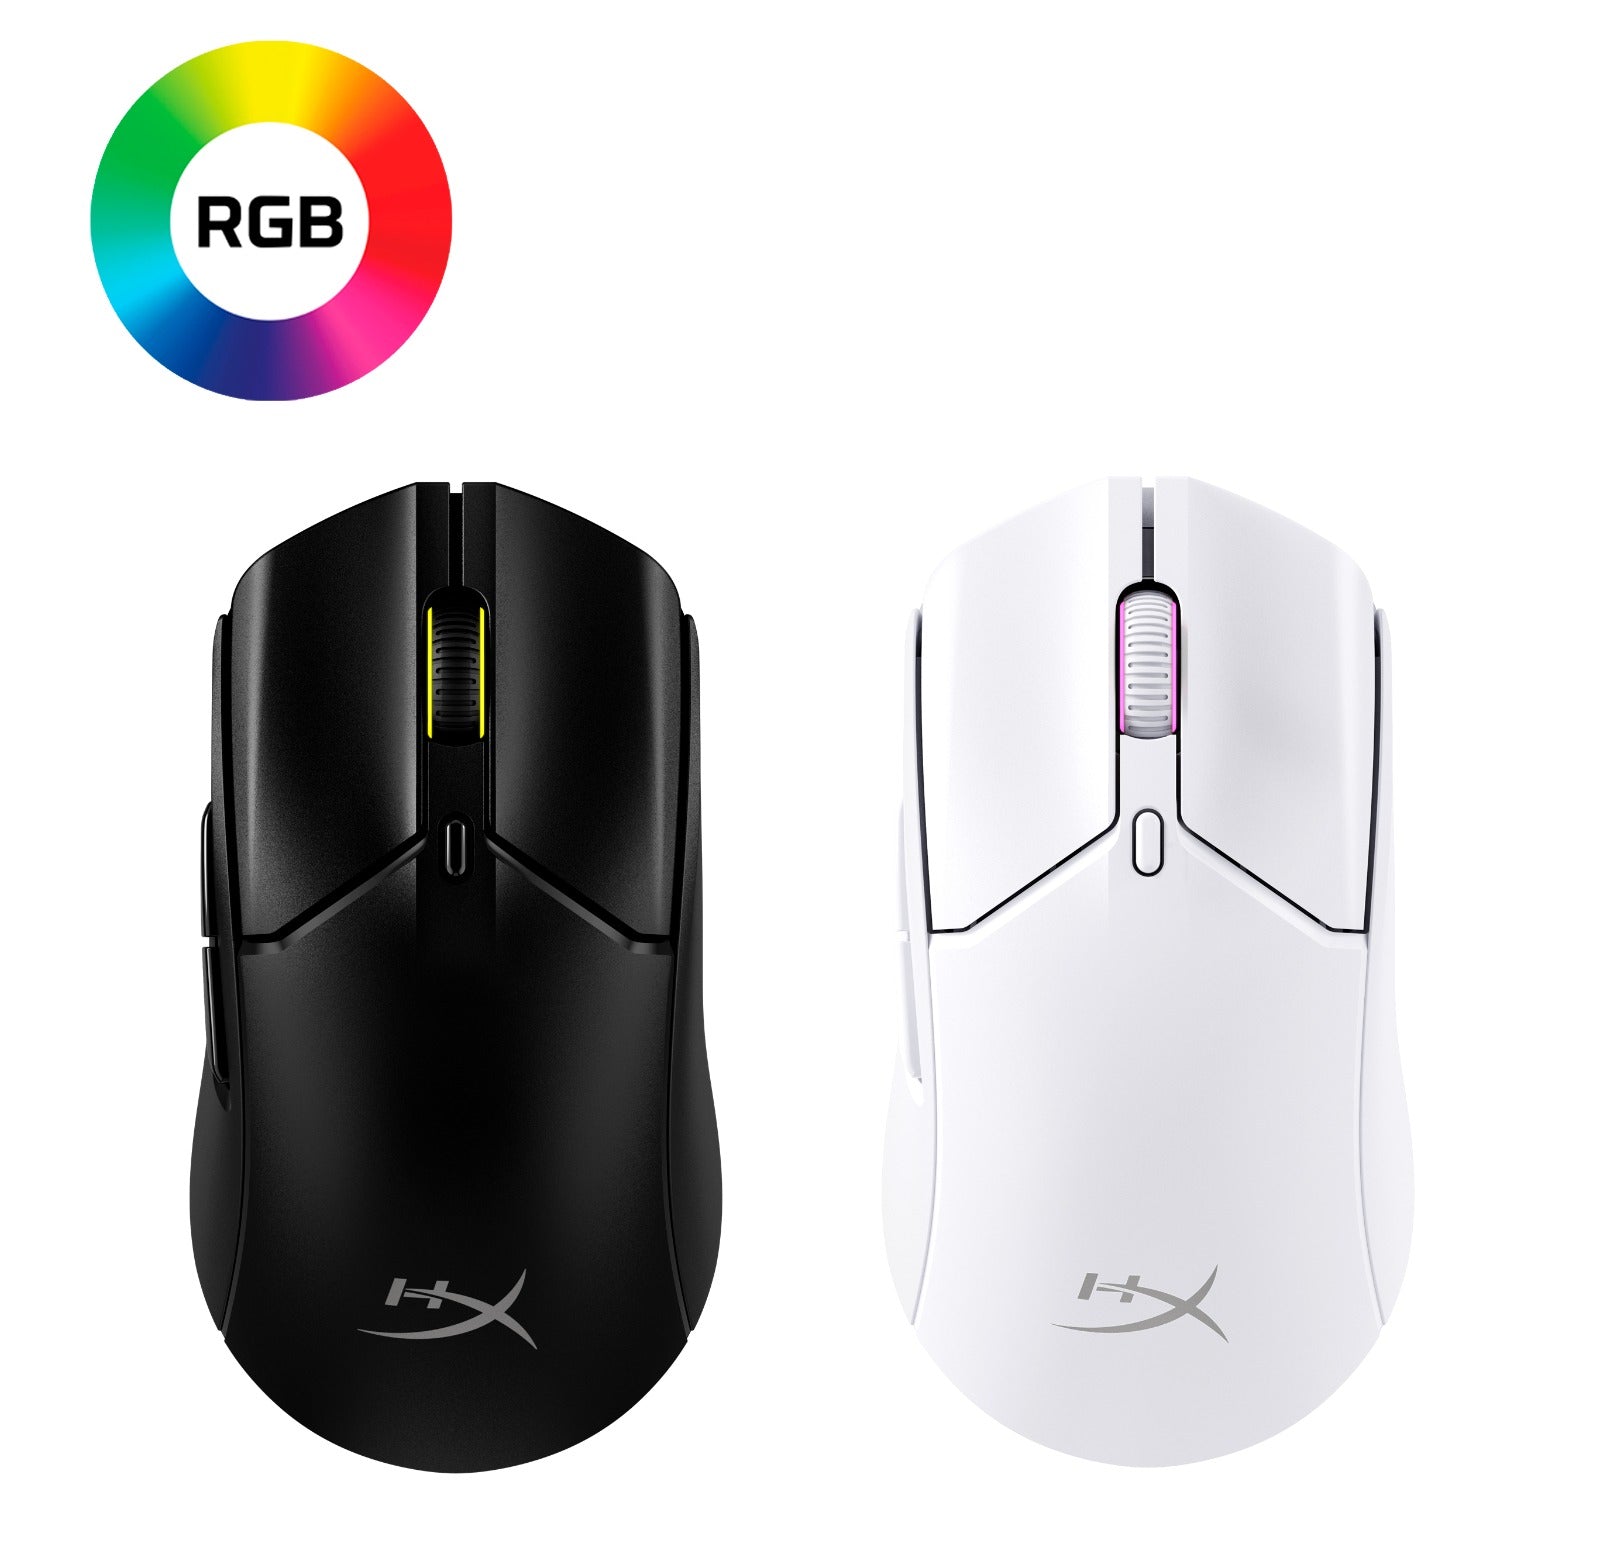 Kingston  HyperX Pulsefire Haste 2 Wireless Gaming Mouse